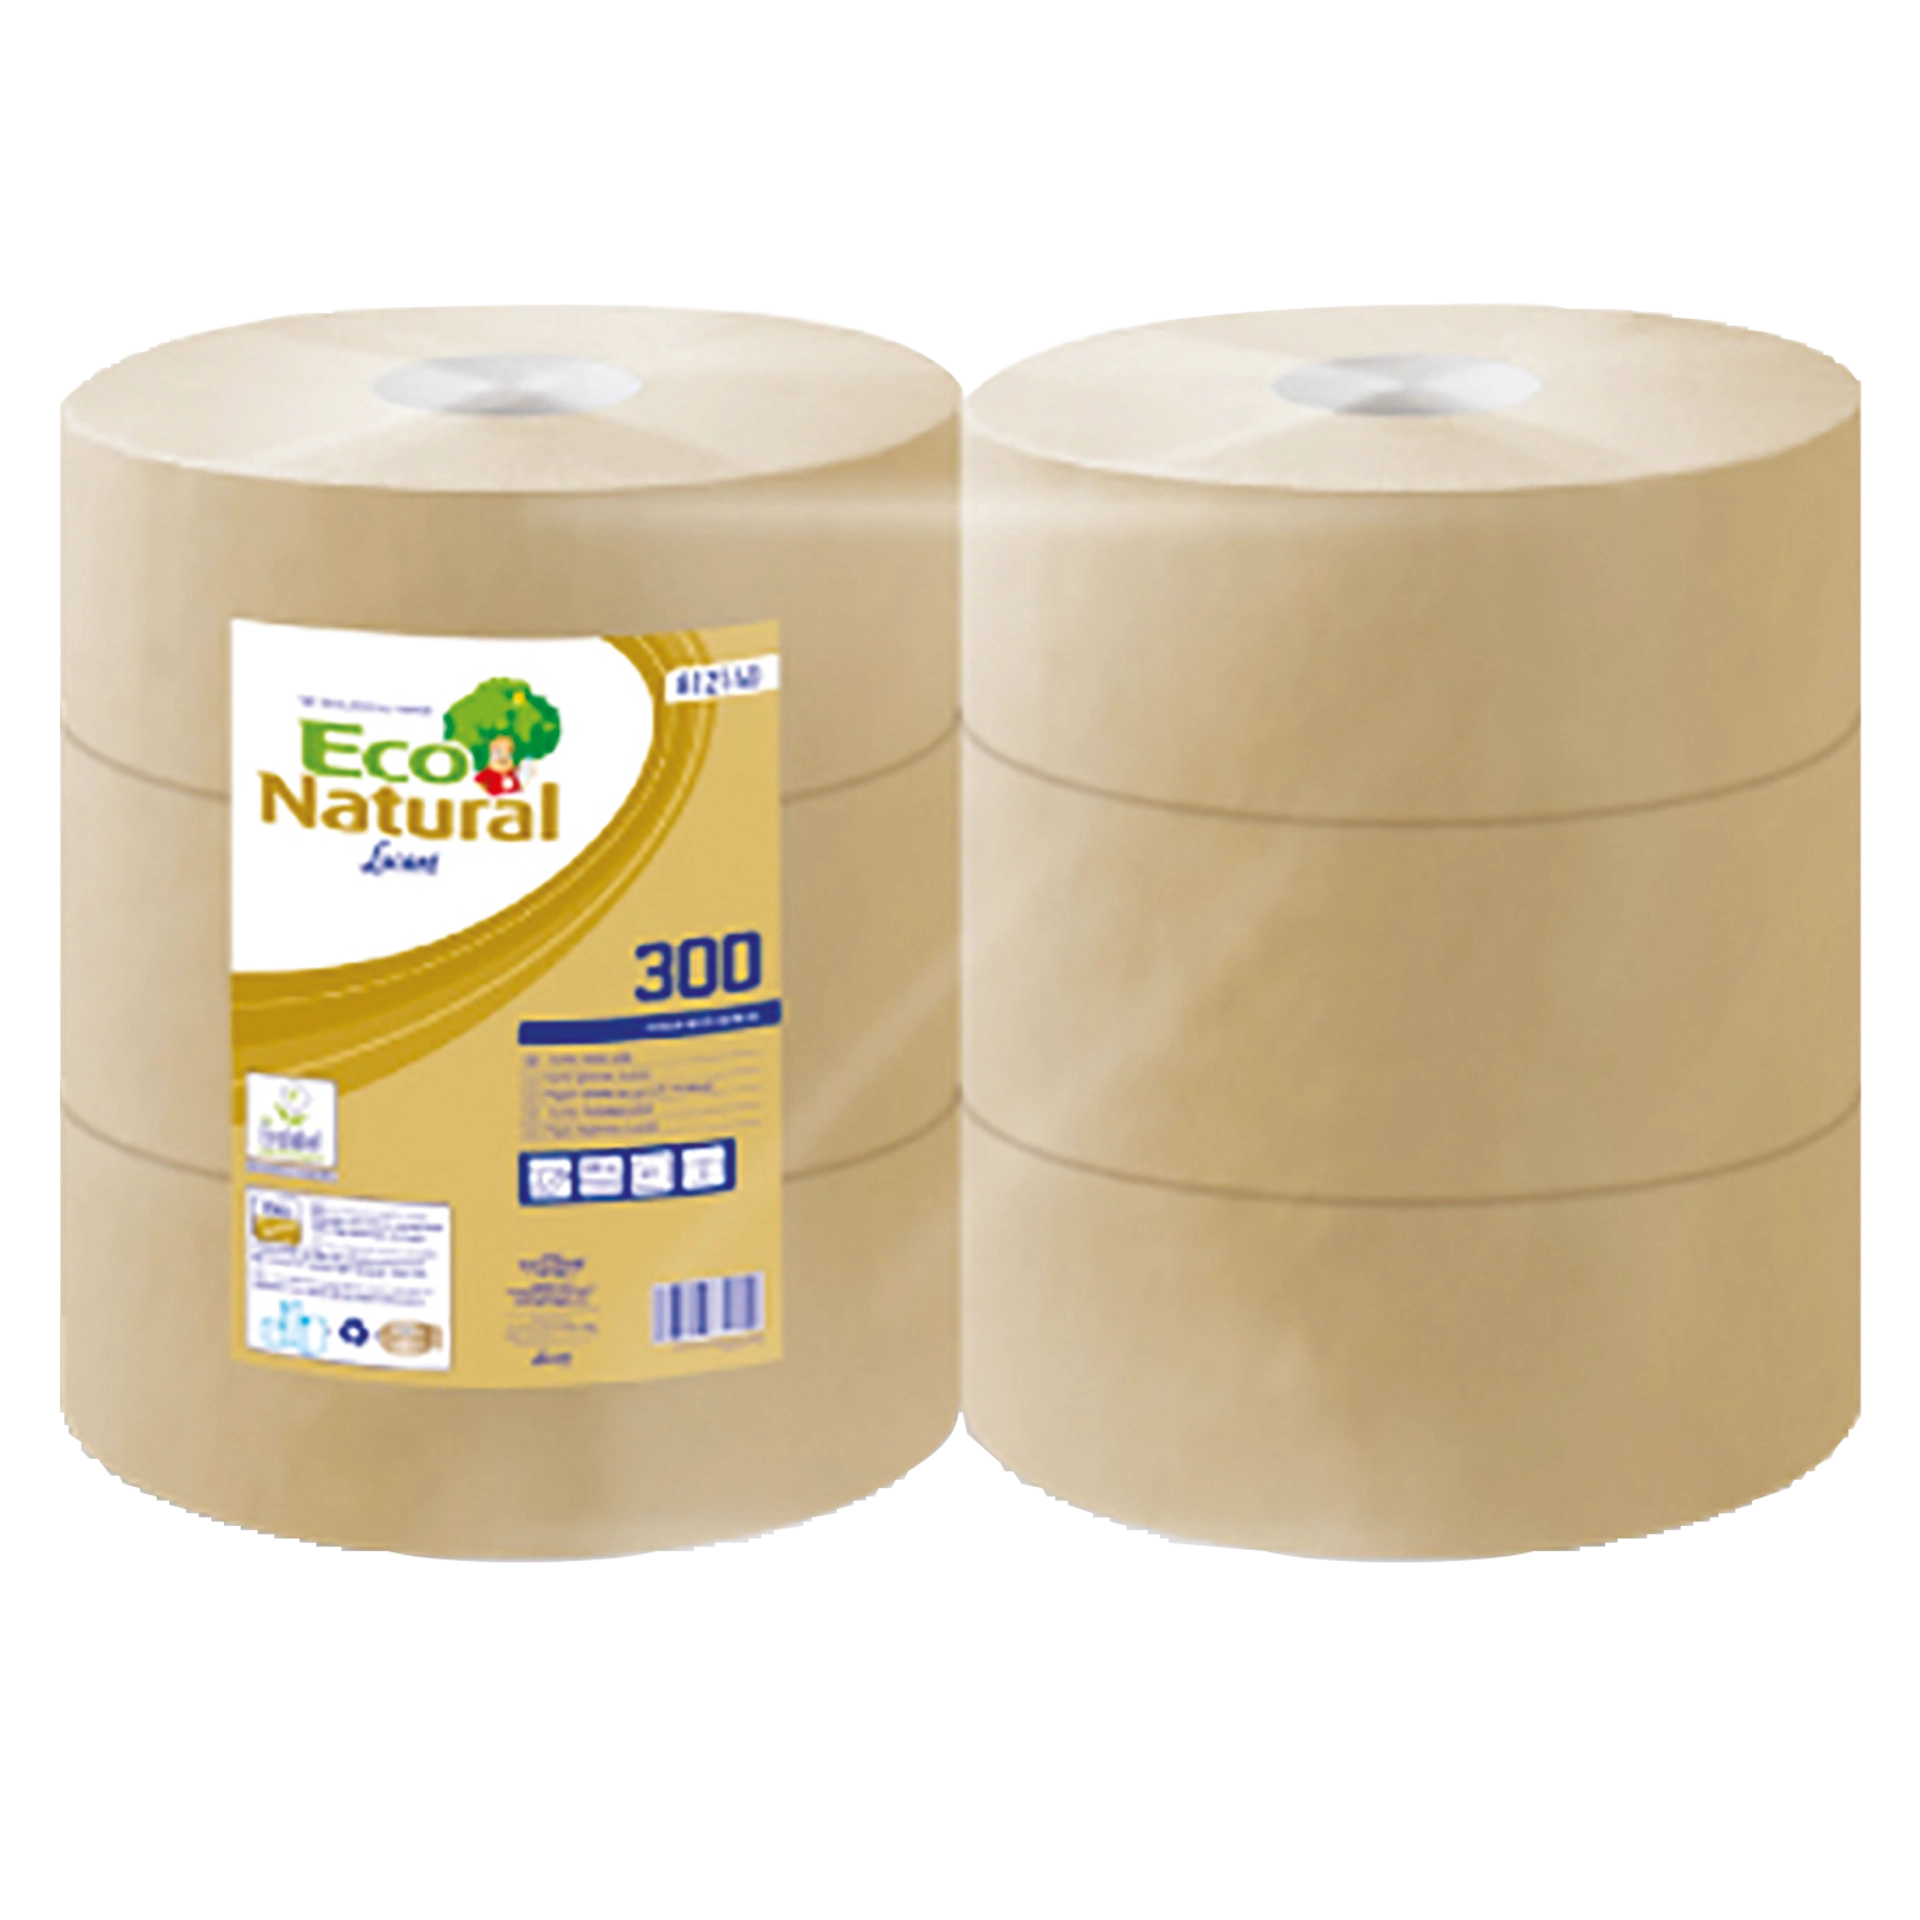 Toilettenpapier | Jumbo Eco Natural Fiberpack | avana 2lg. 811 Abrisse/37 cm